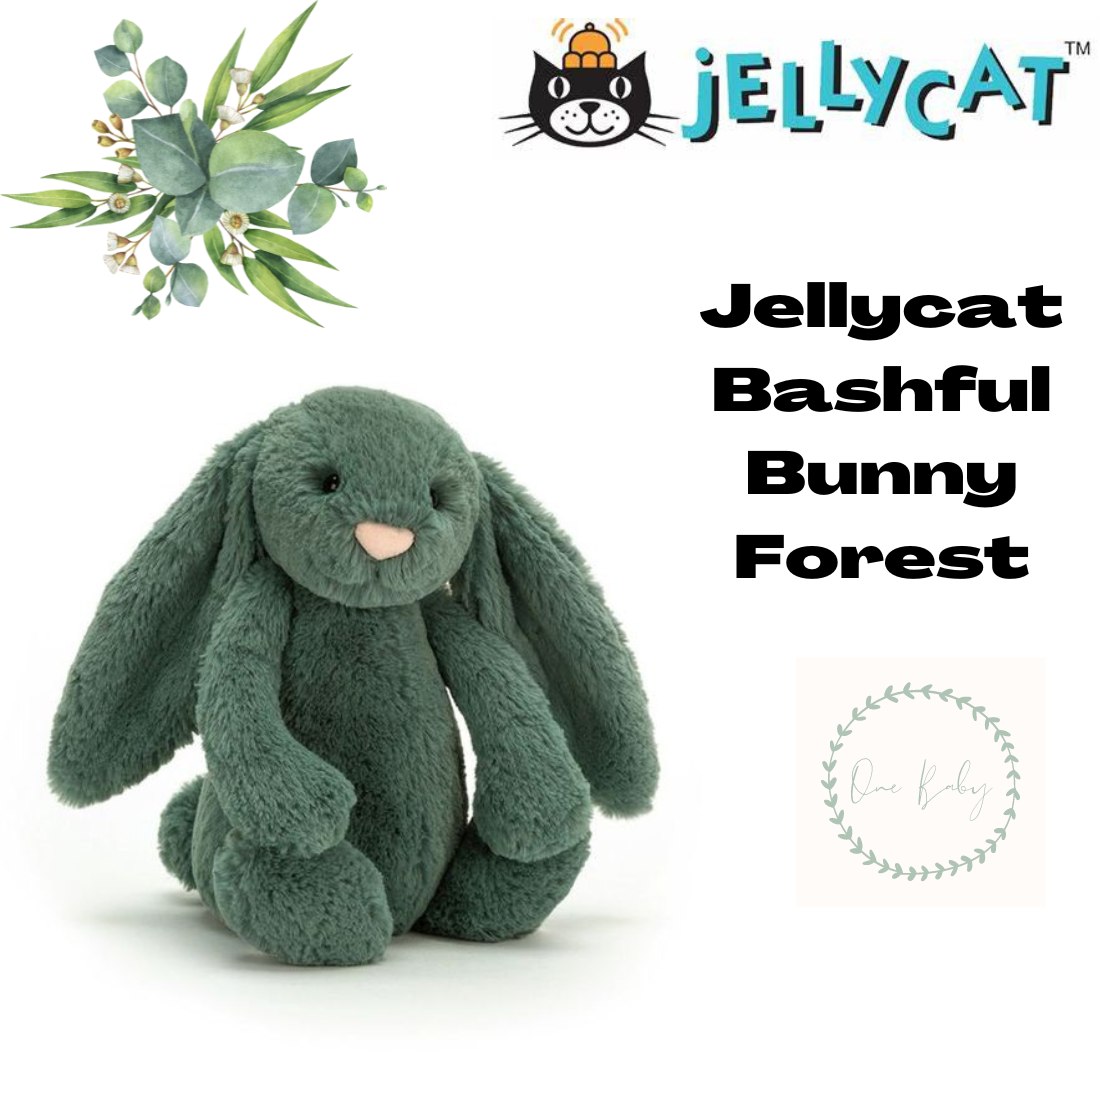 Jellycat Bashful Bunny Forest Medium – One Baby